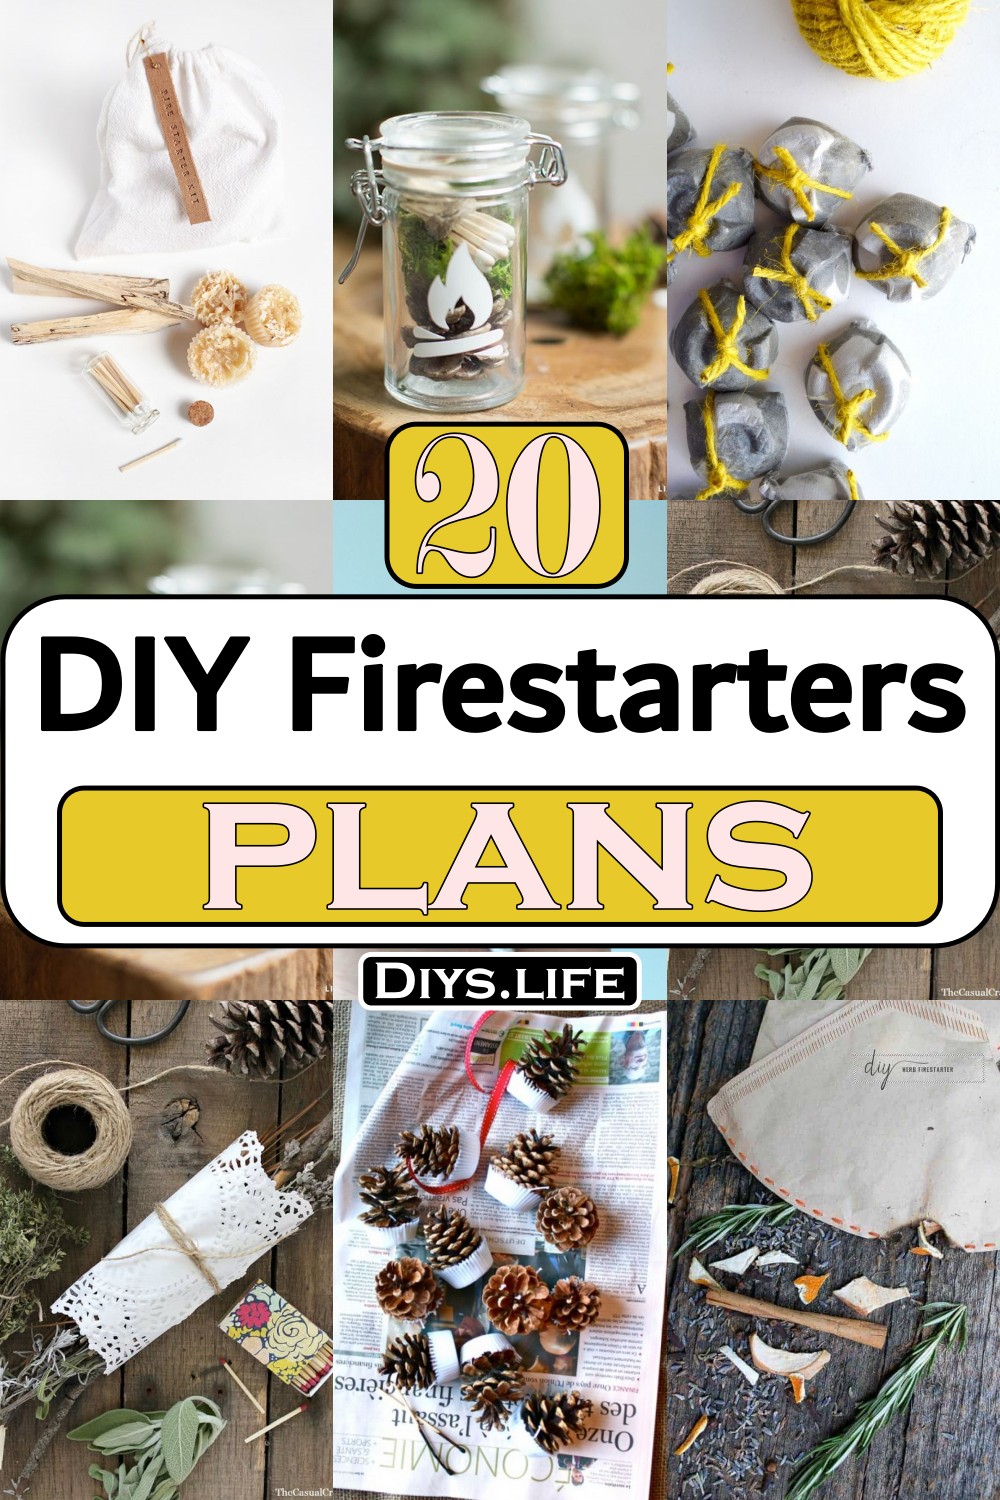 DIY Firestarters plans